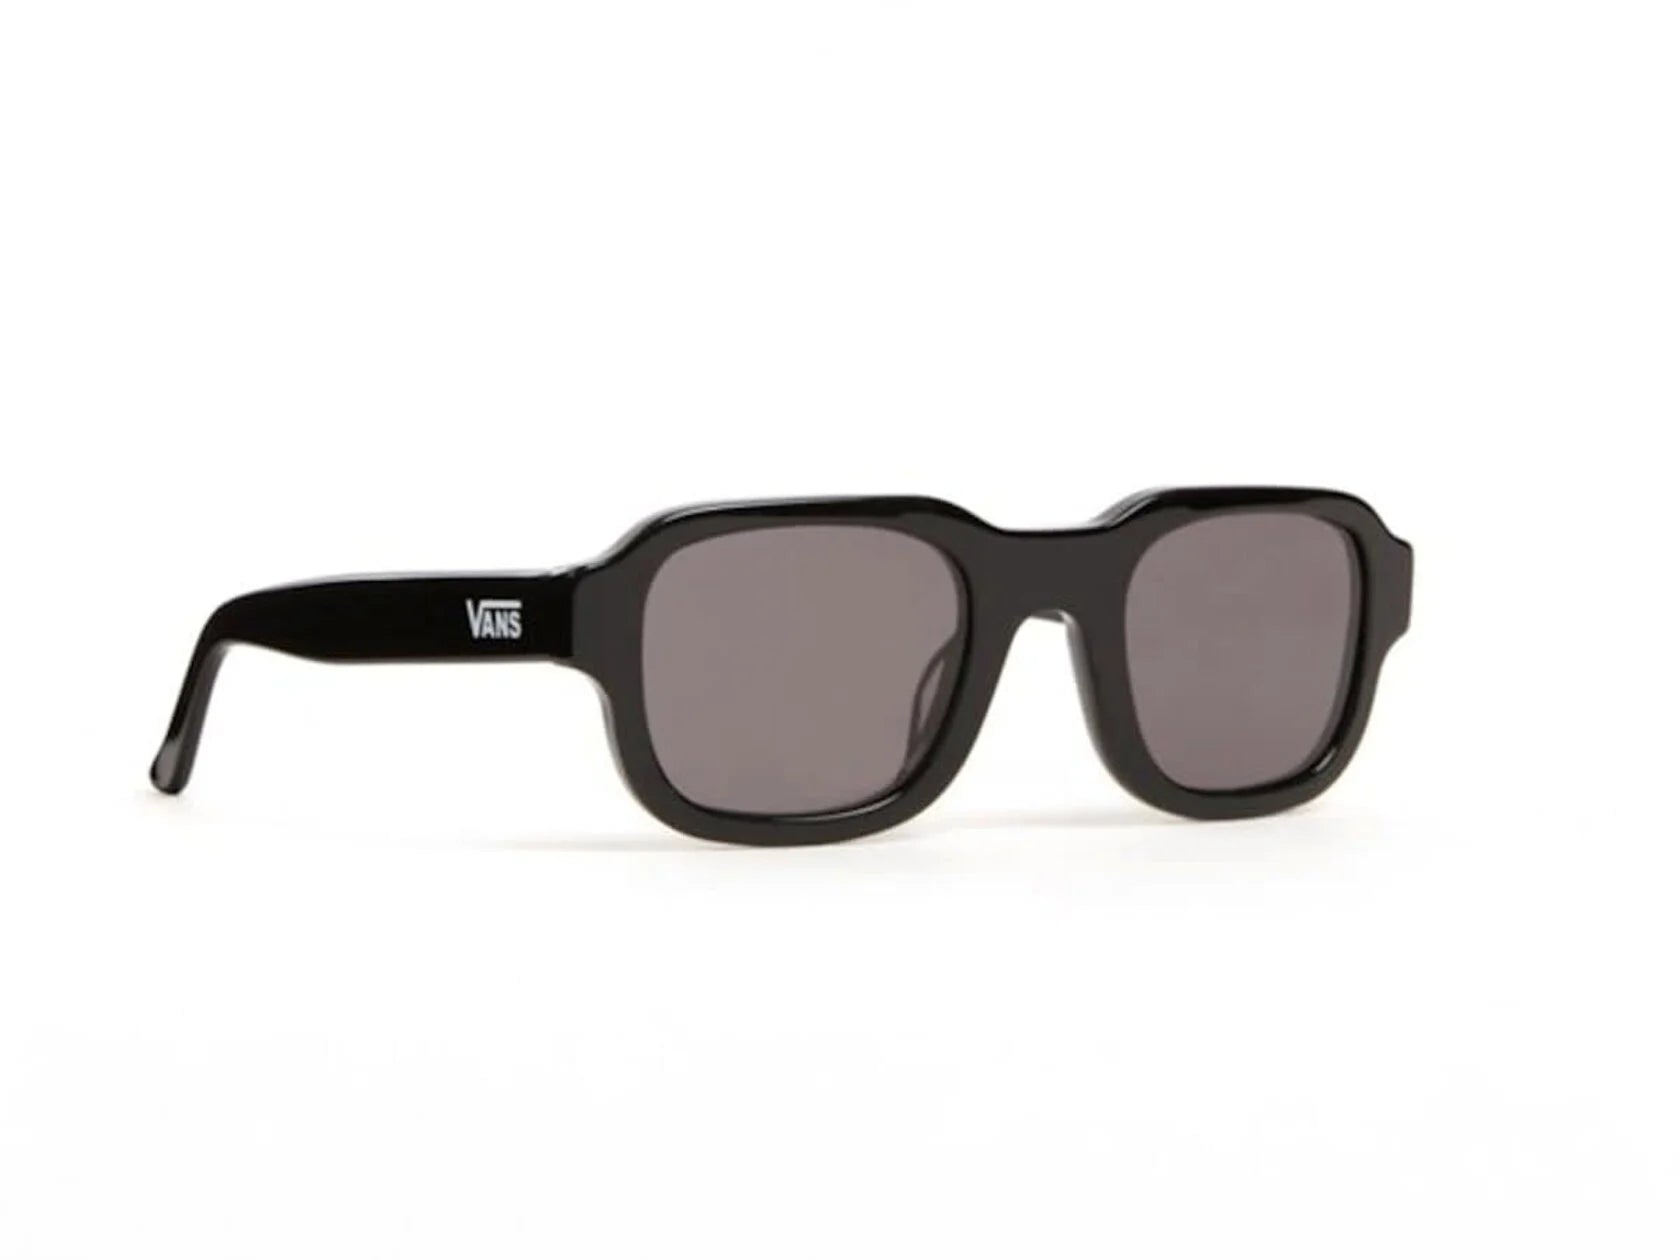 VANS 66 Sunglasses Black Sunglasses Vans 